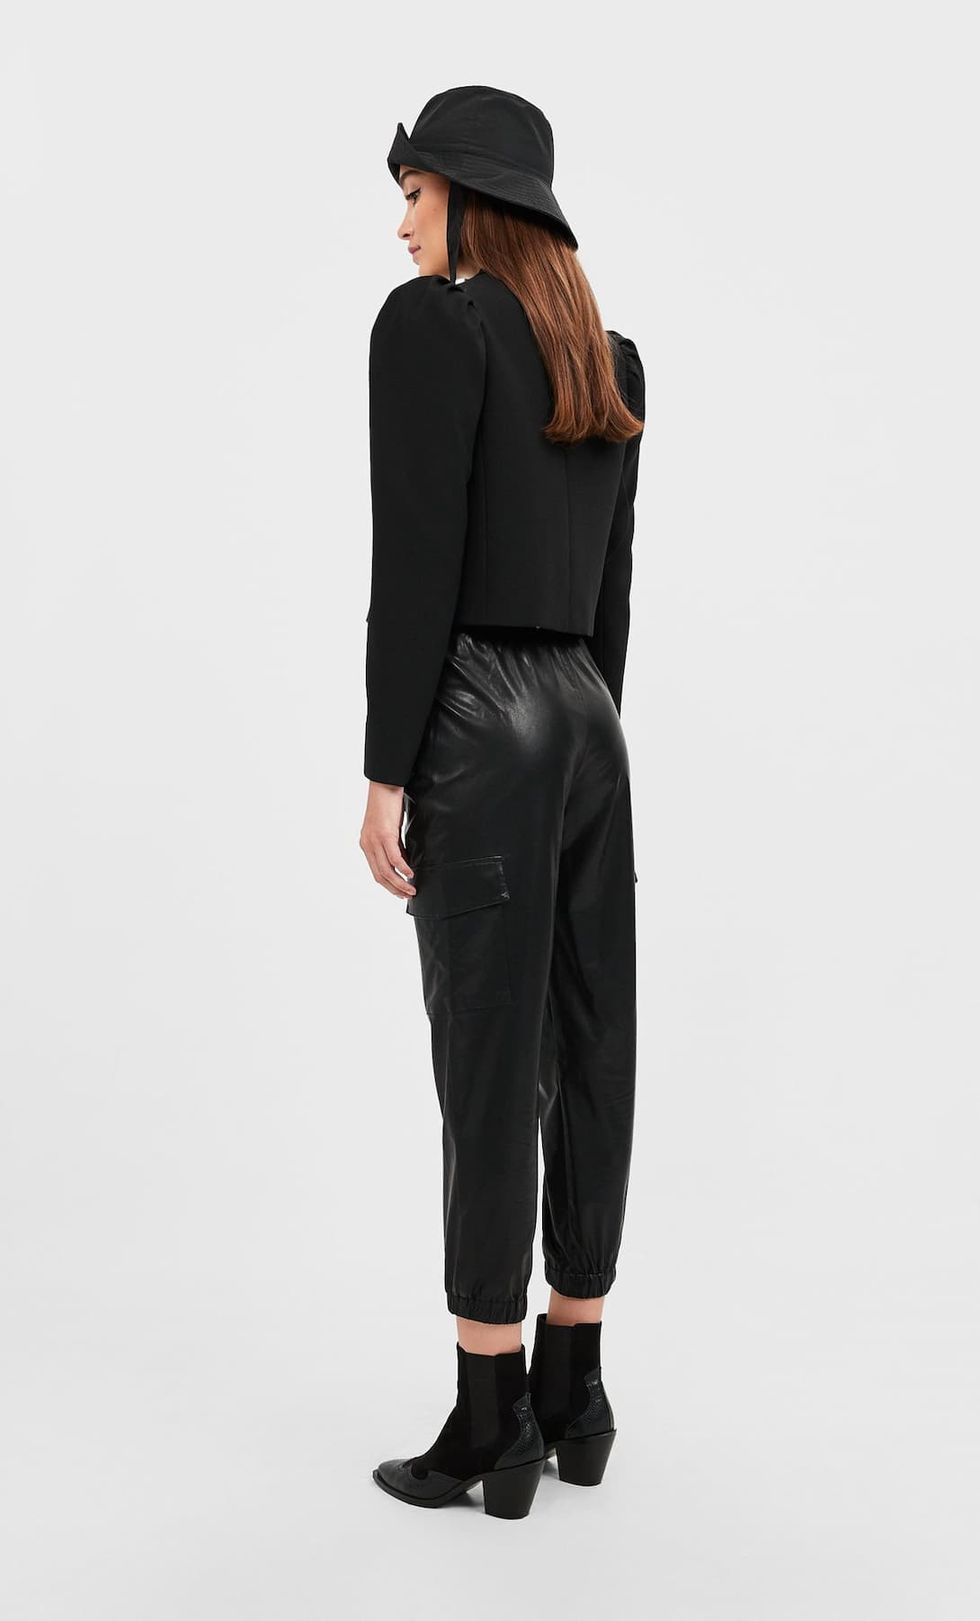 pantaloni donna moda 2020 pelle stradivarius